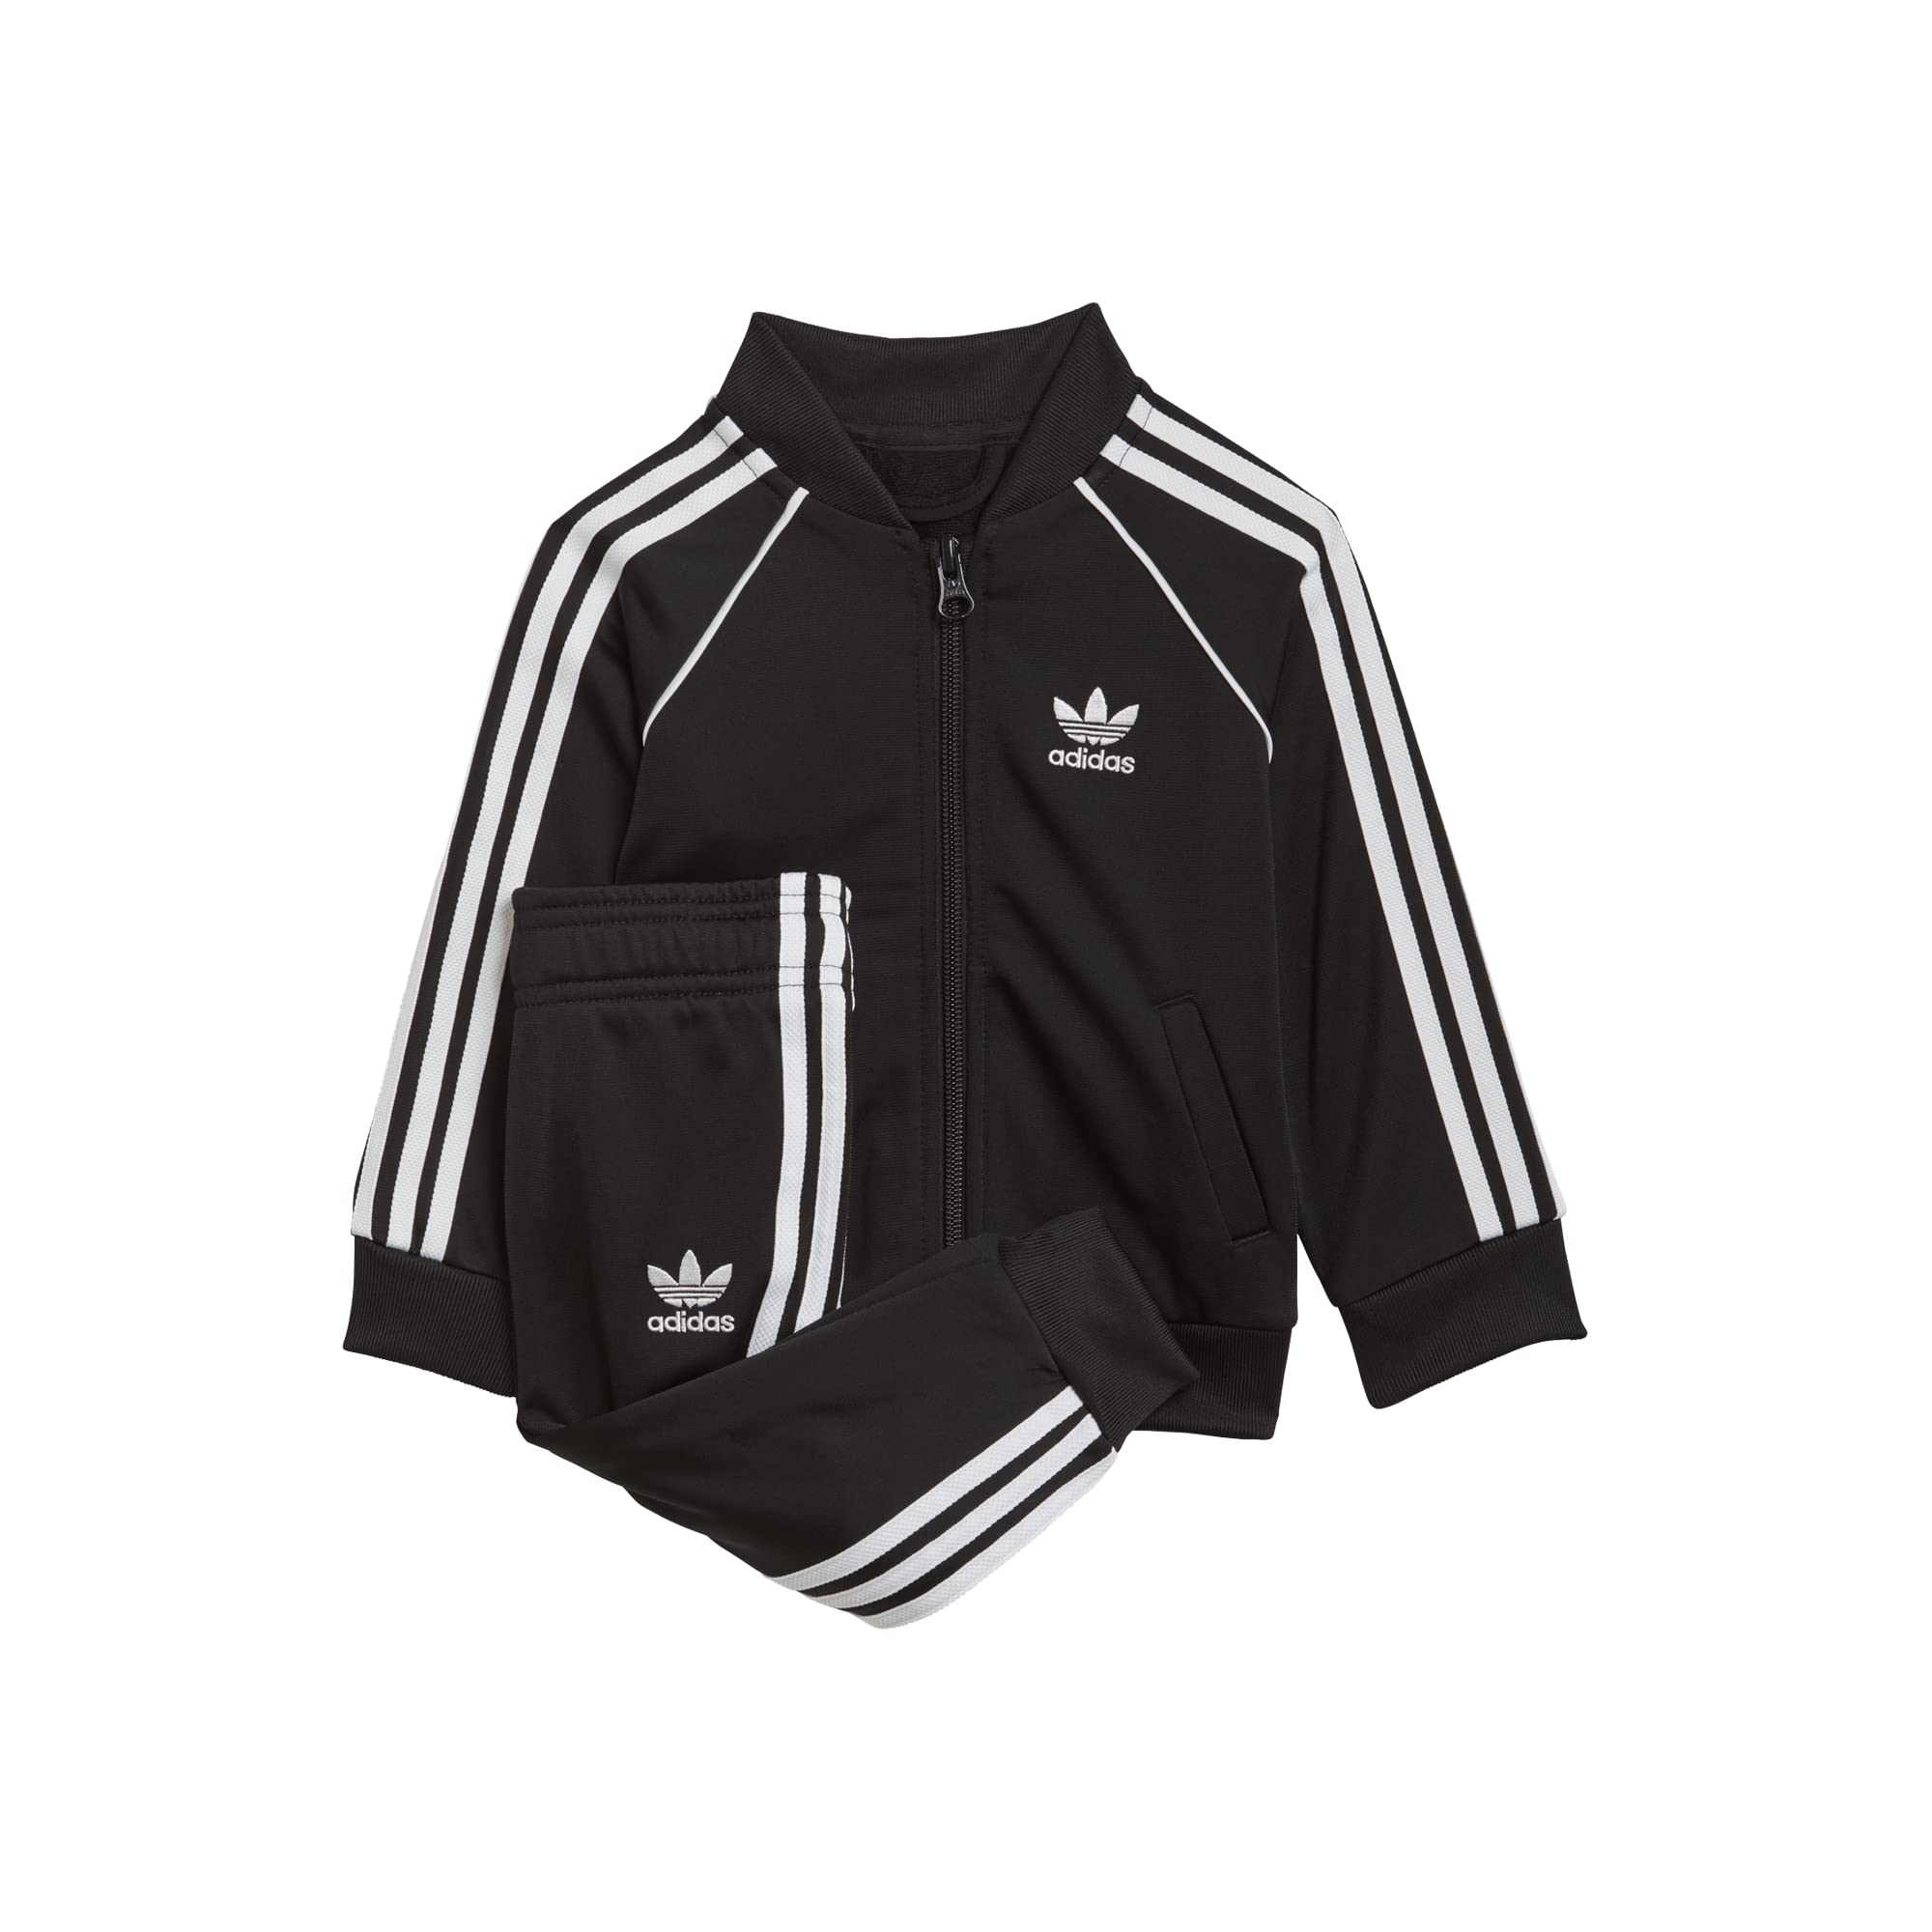 adidas Unisex Baby SST TRACKSUIT GN8 Trainingsanzug, black/white, 2-3 Jahre, D 98